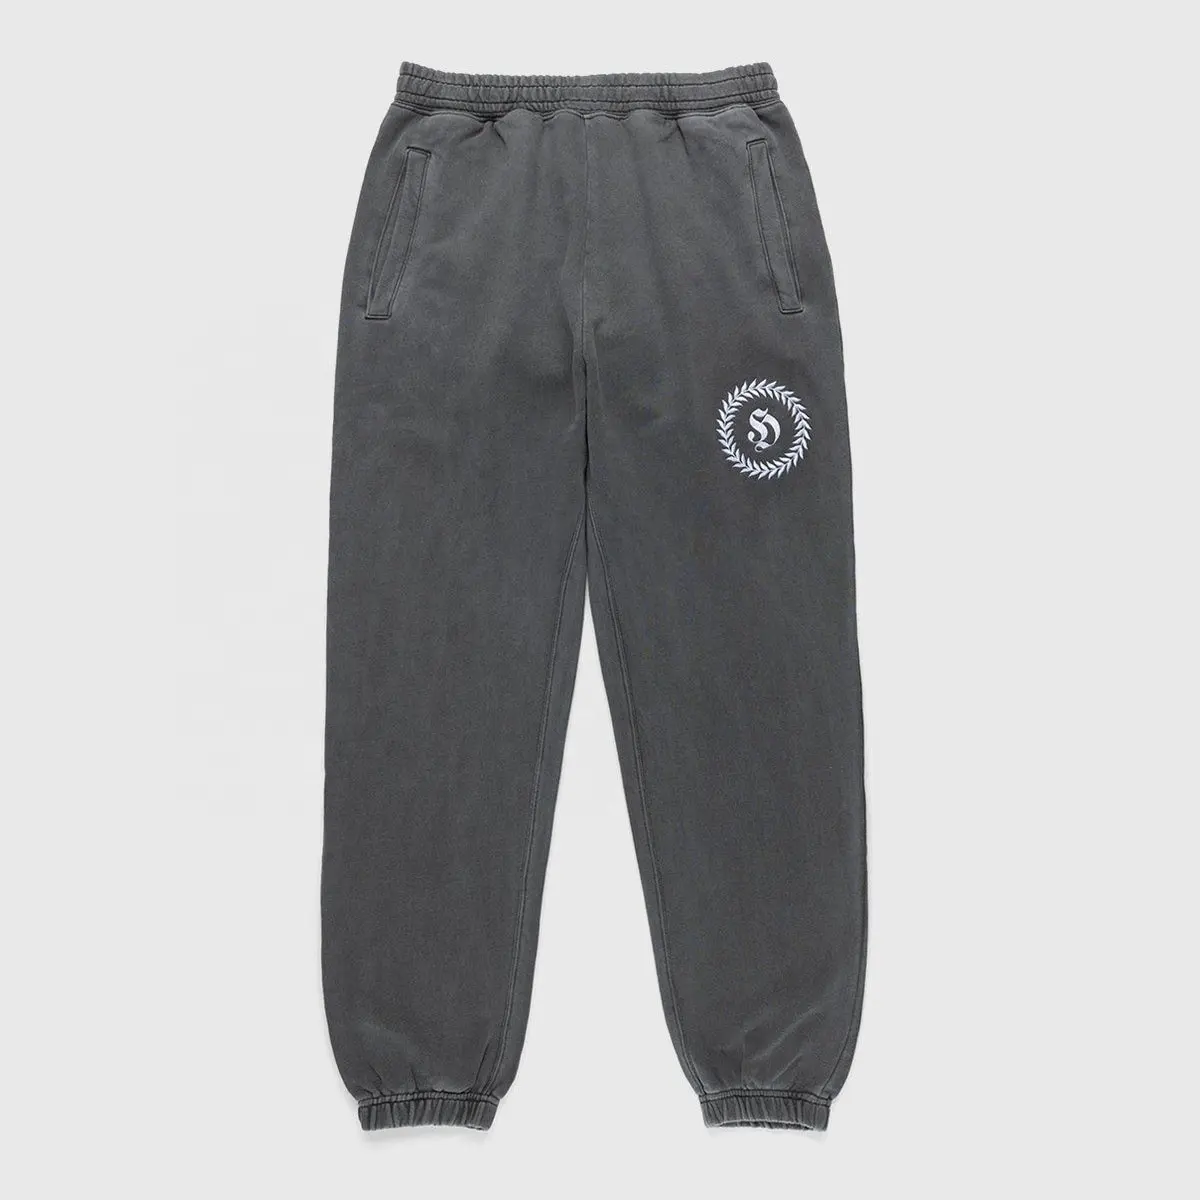 Custom Logo Vintage Loose Workout pants unisex Sweat Pants thermal Fleece joggers Sweatpants men